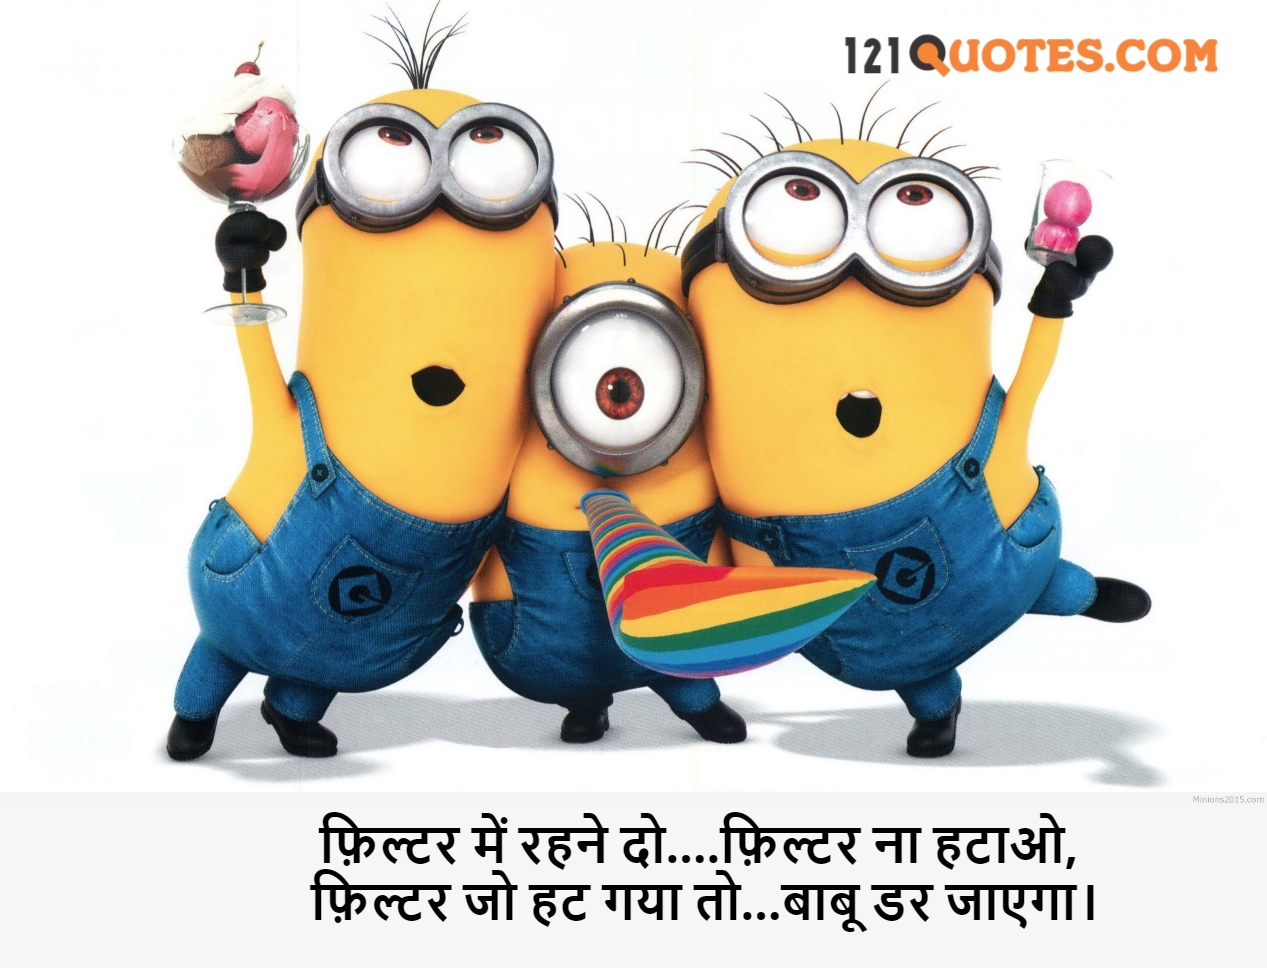 Top 30+ Funny Quotes, Image, Shayari, WhatsApp Status, Wallpaper